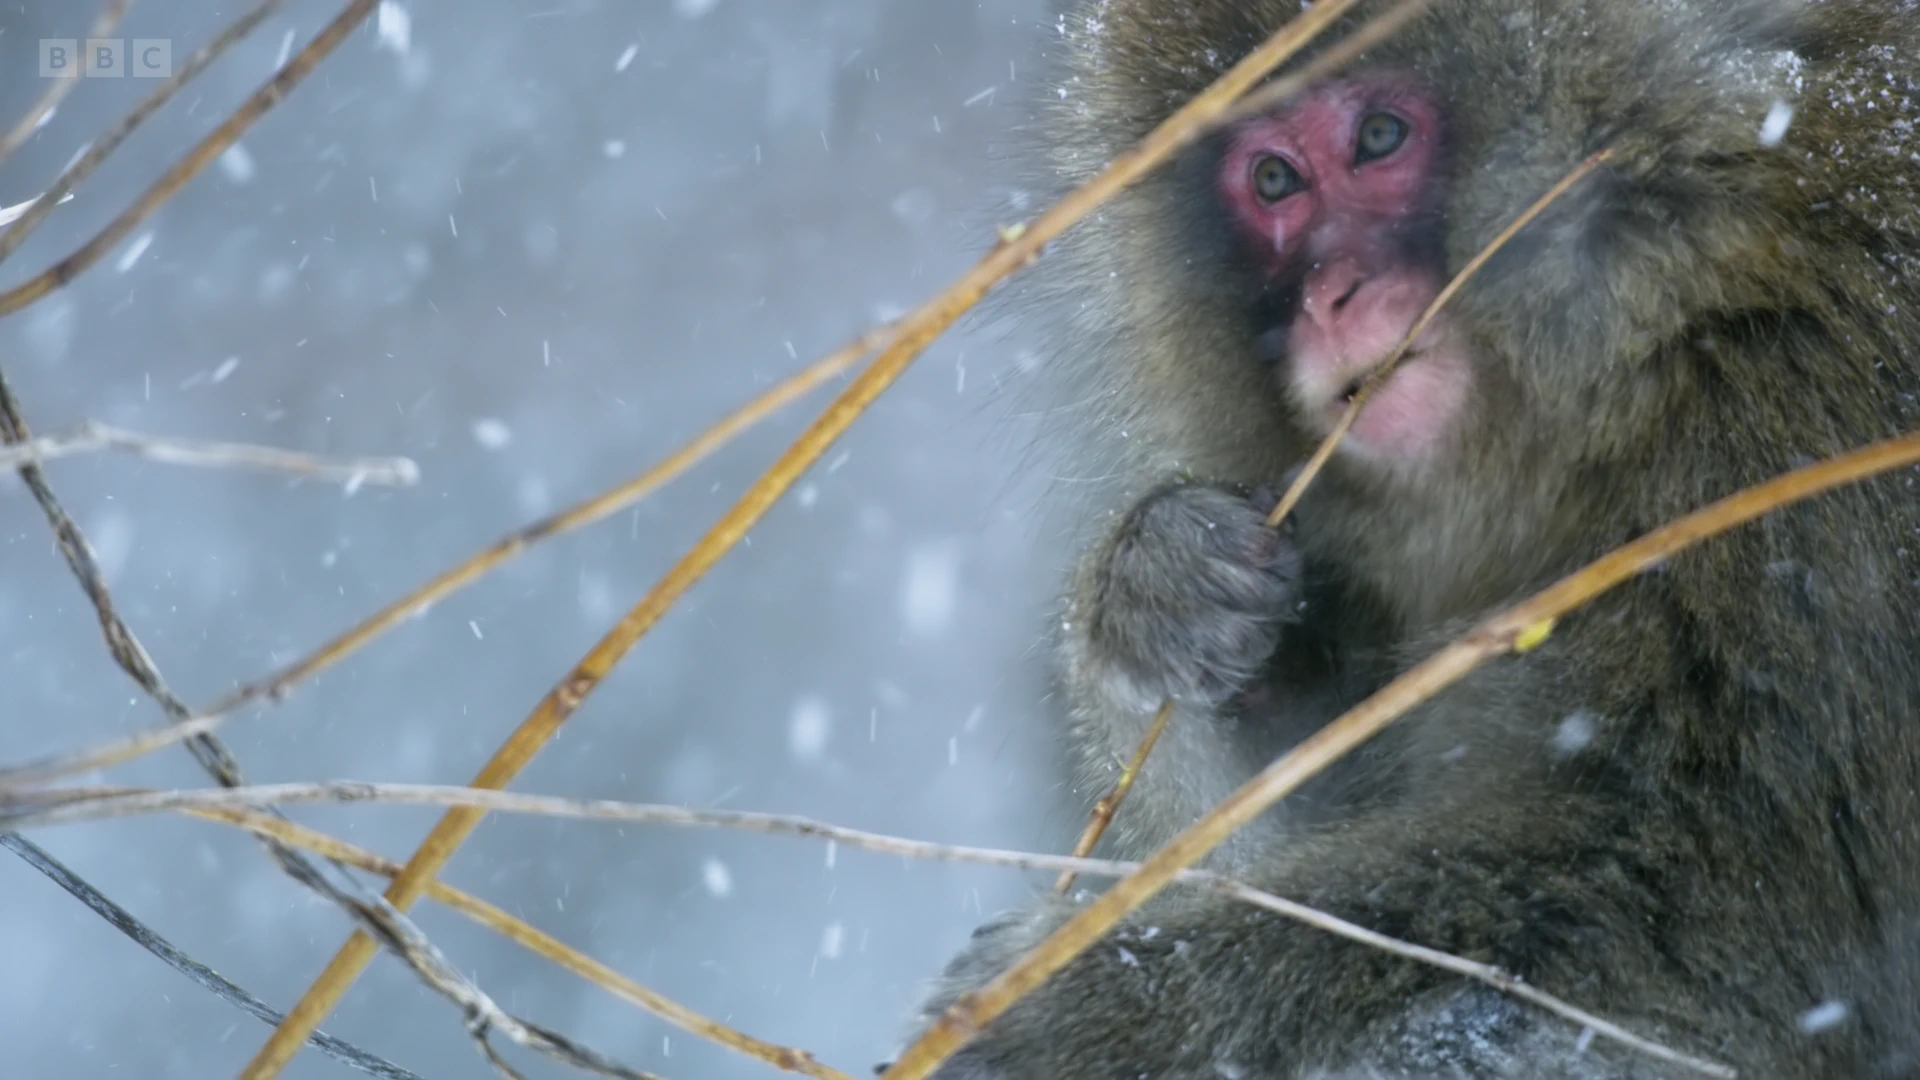 Japanese macaque (Macaca fuscata fuscata) as shown in Frozen Planet II - Frozen Peaks